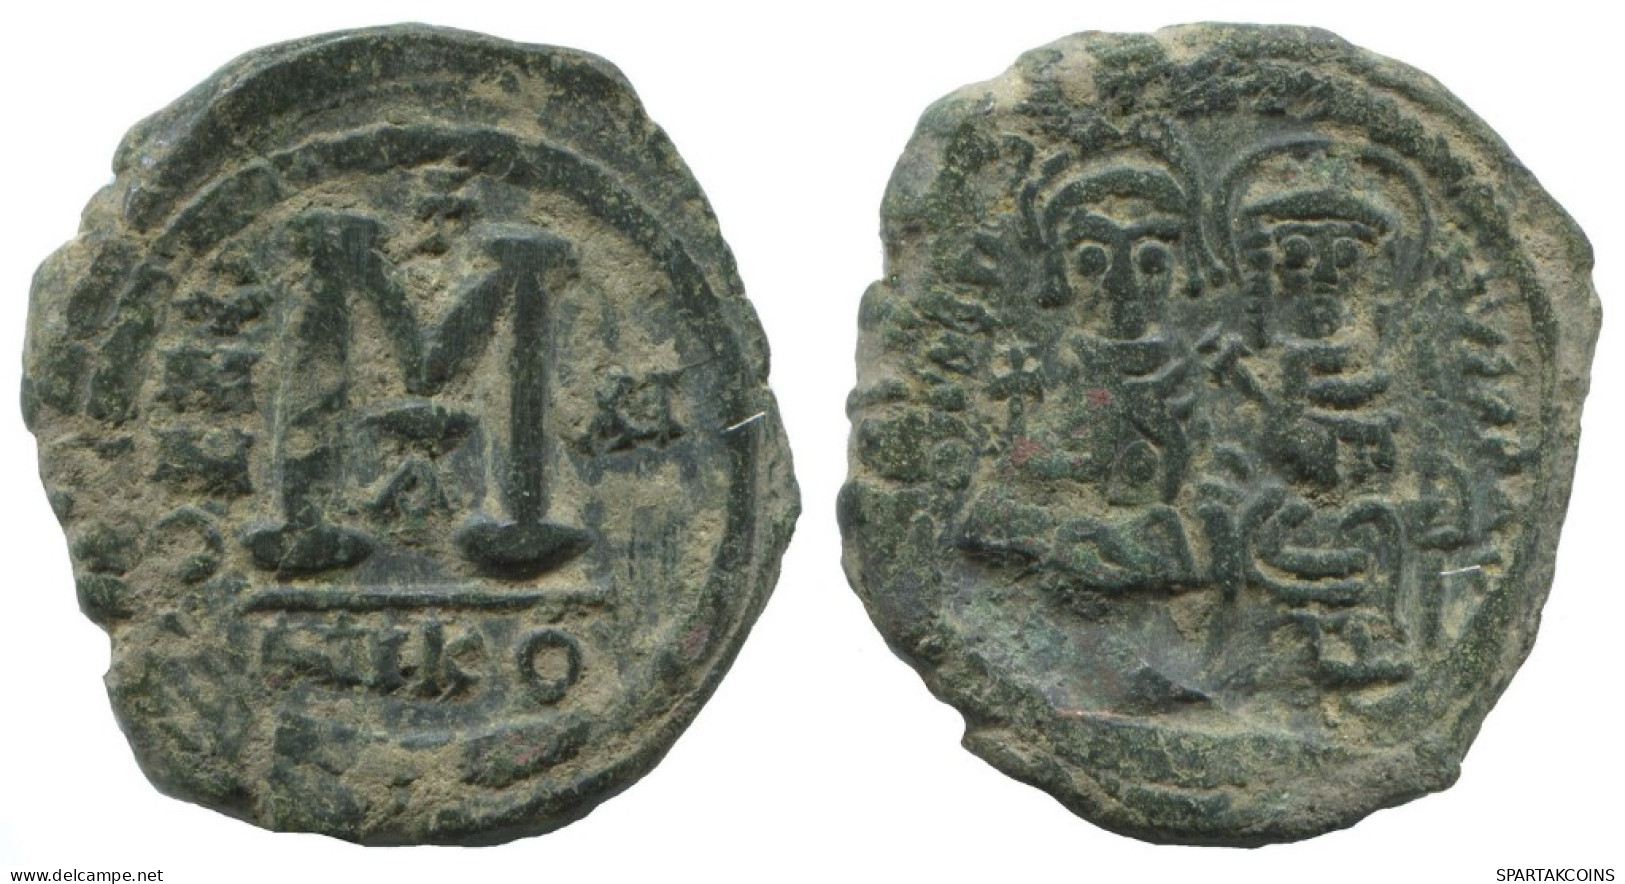 FLAVIUS JUSTINUS II FOLLIS Antike BYZANTINISCHE Münze  12g/30m #AA513.19.D.A - Byzantium